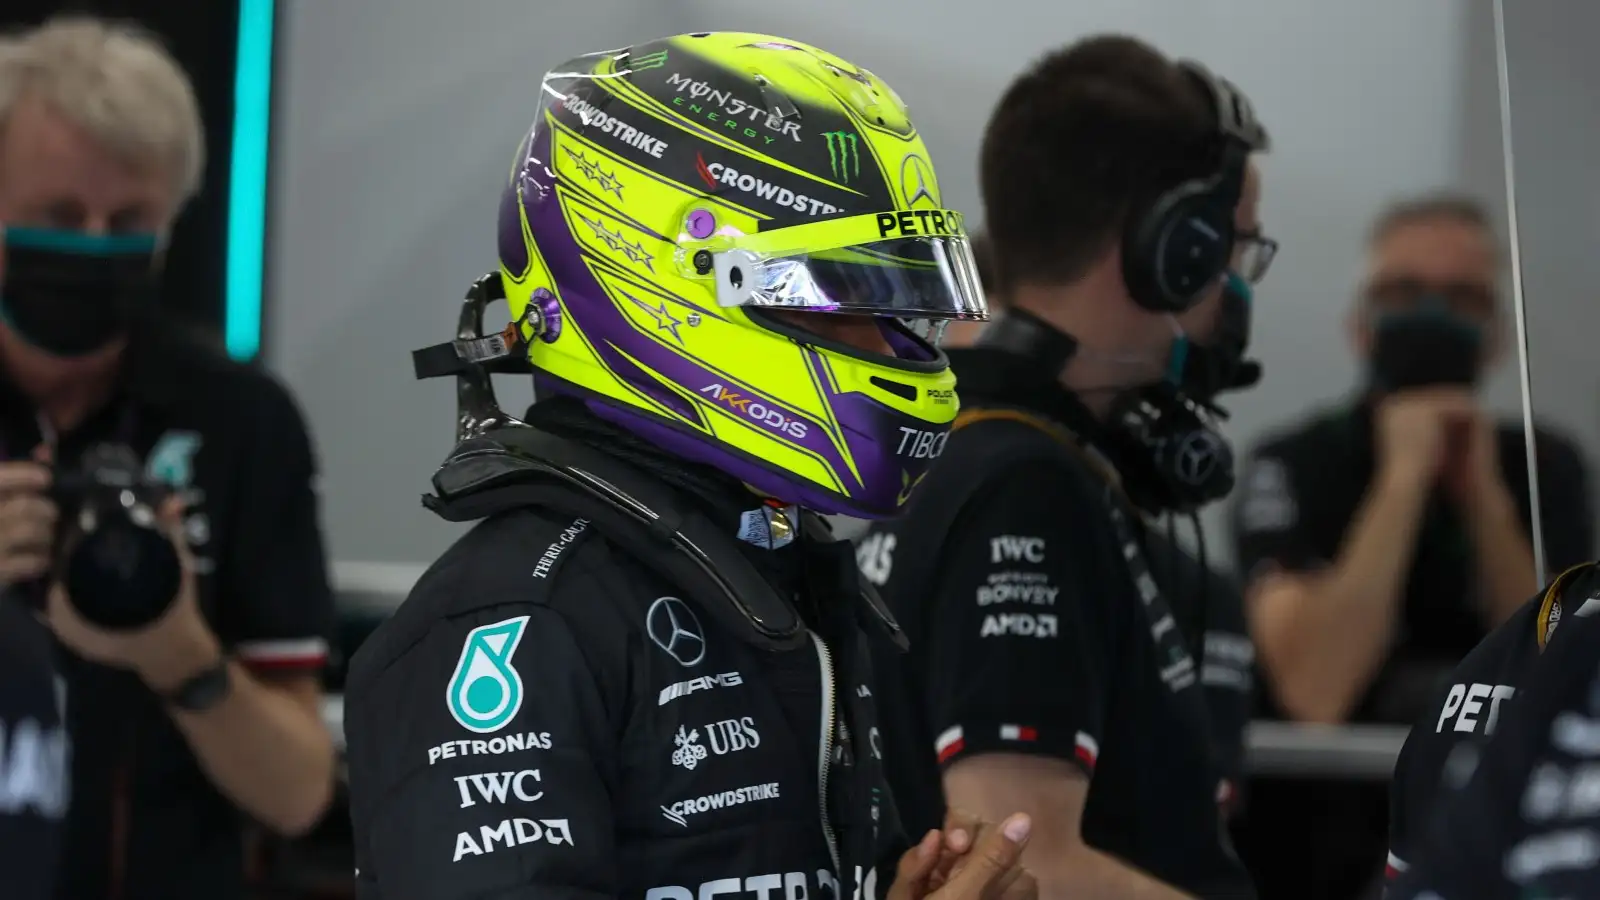 Lewis Hamilton, helmet on in the Mercedes garage. Saudi Arabia March 2022.